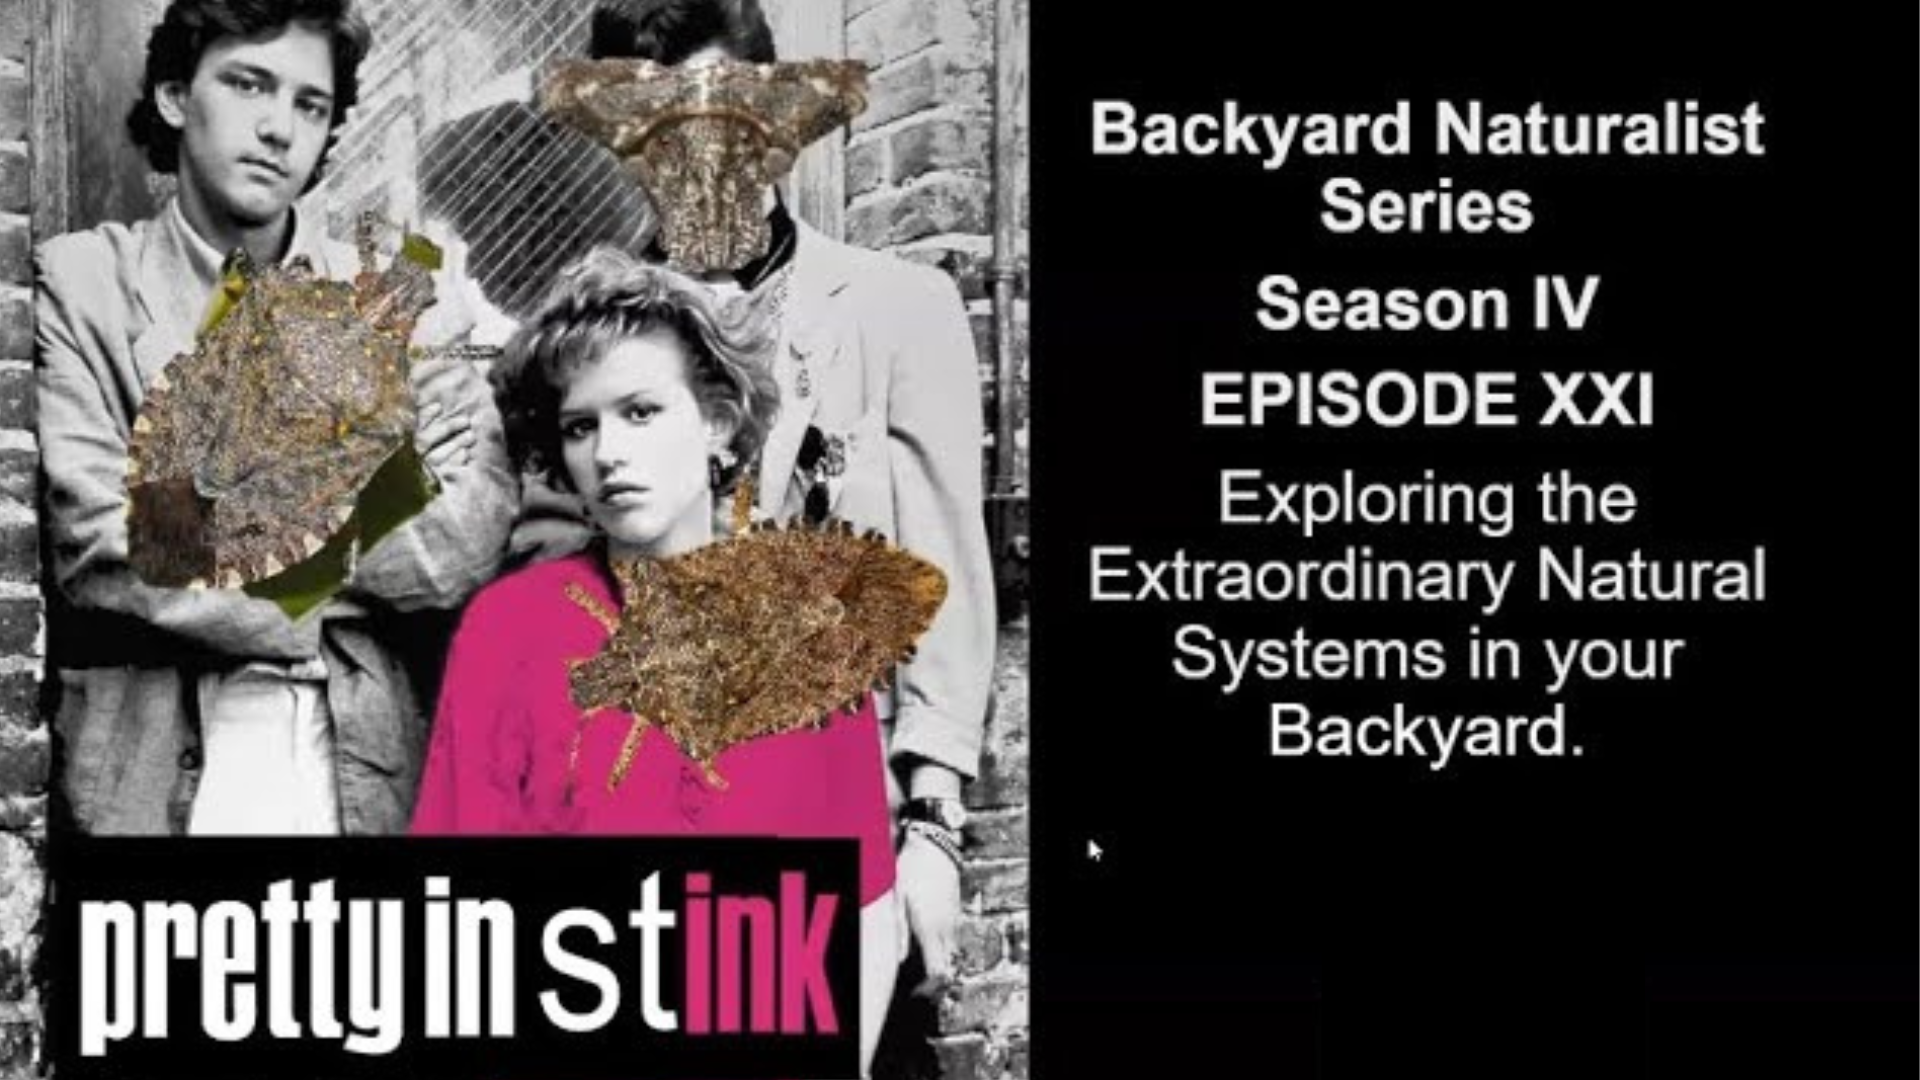 Pretty in Stink - Backyard Naturalist Lecture Series